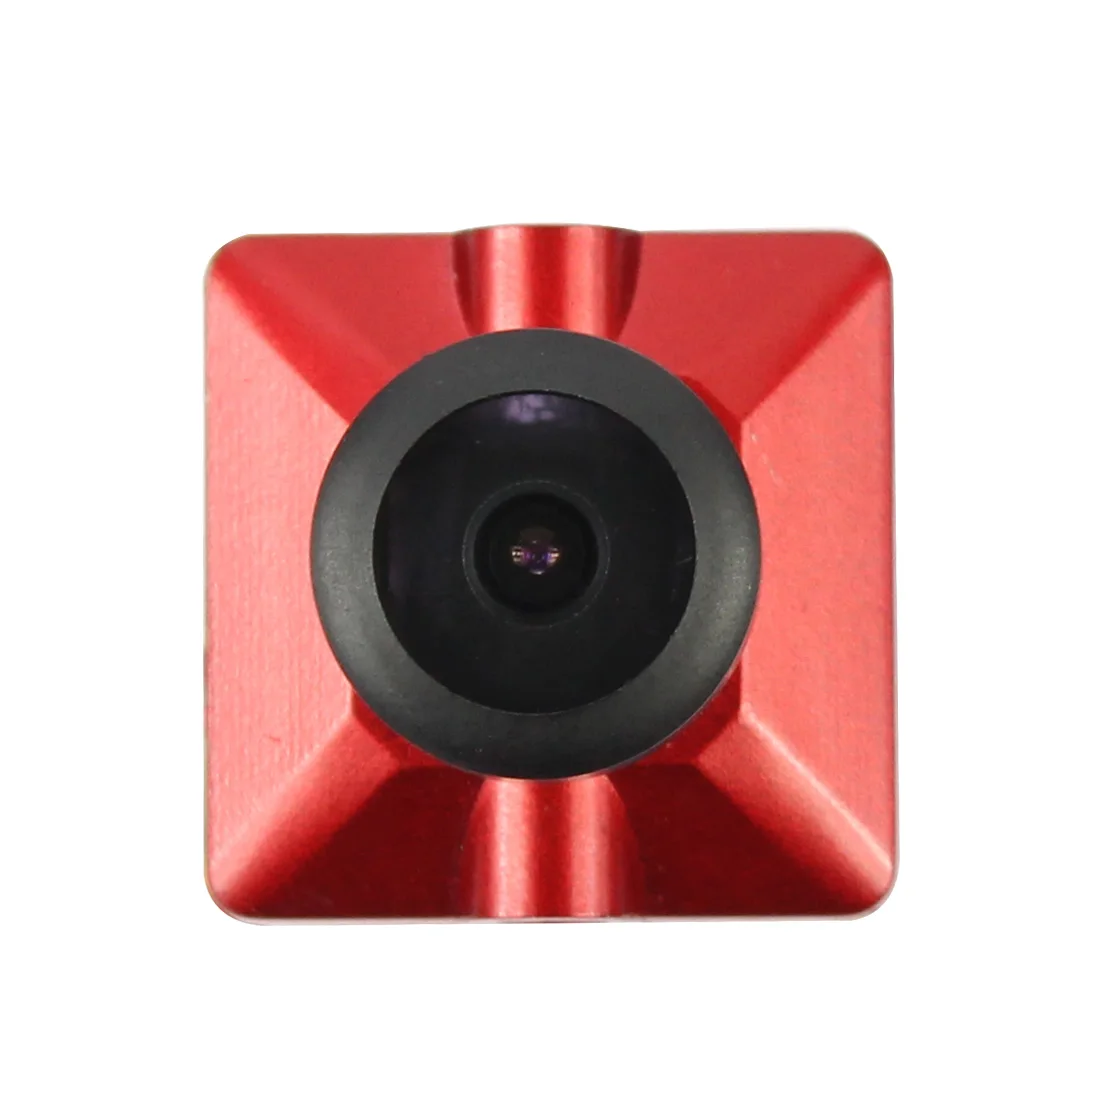 FPV Racing Cross camera 1200TVL микро камера Мини Цифровая видеокамера 2,1 мм объектив для воздушной фотокамеры RC Drone